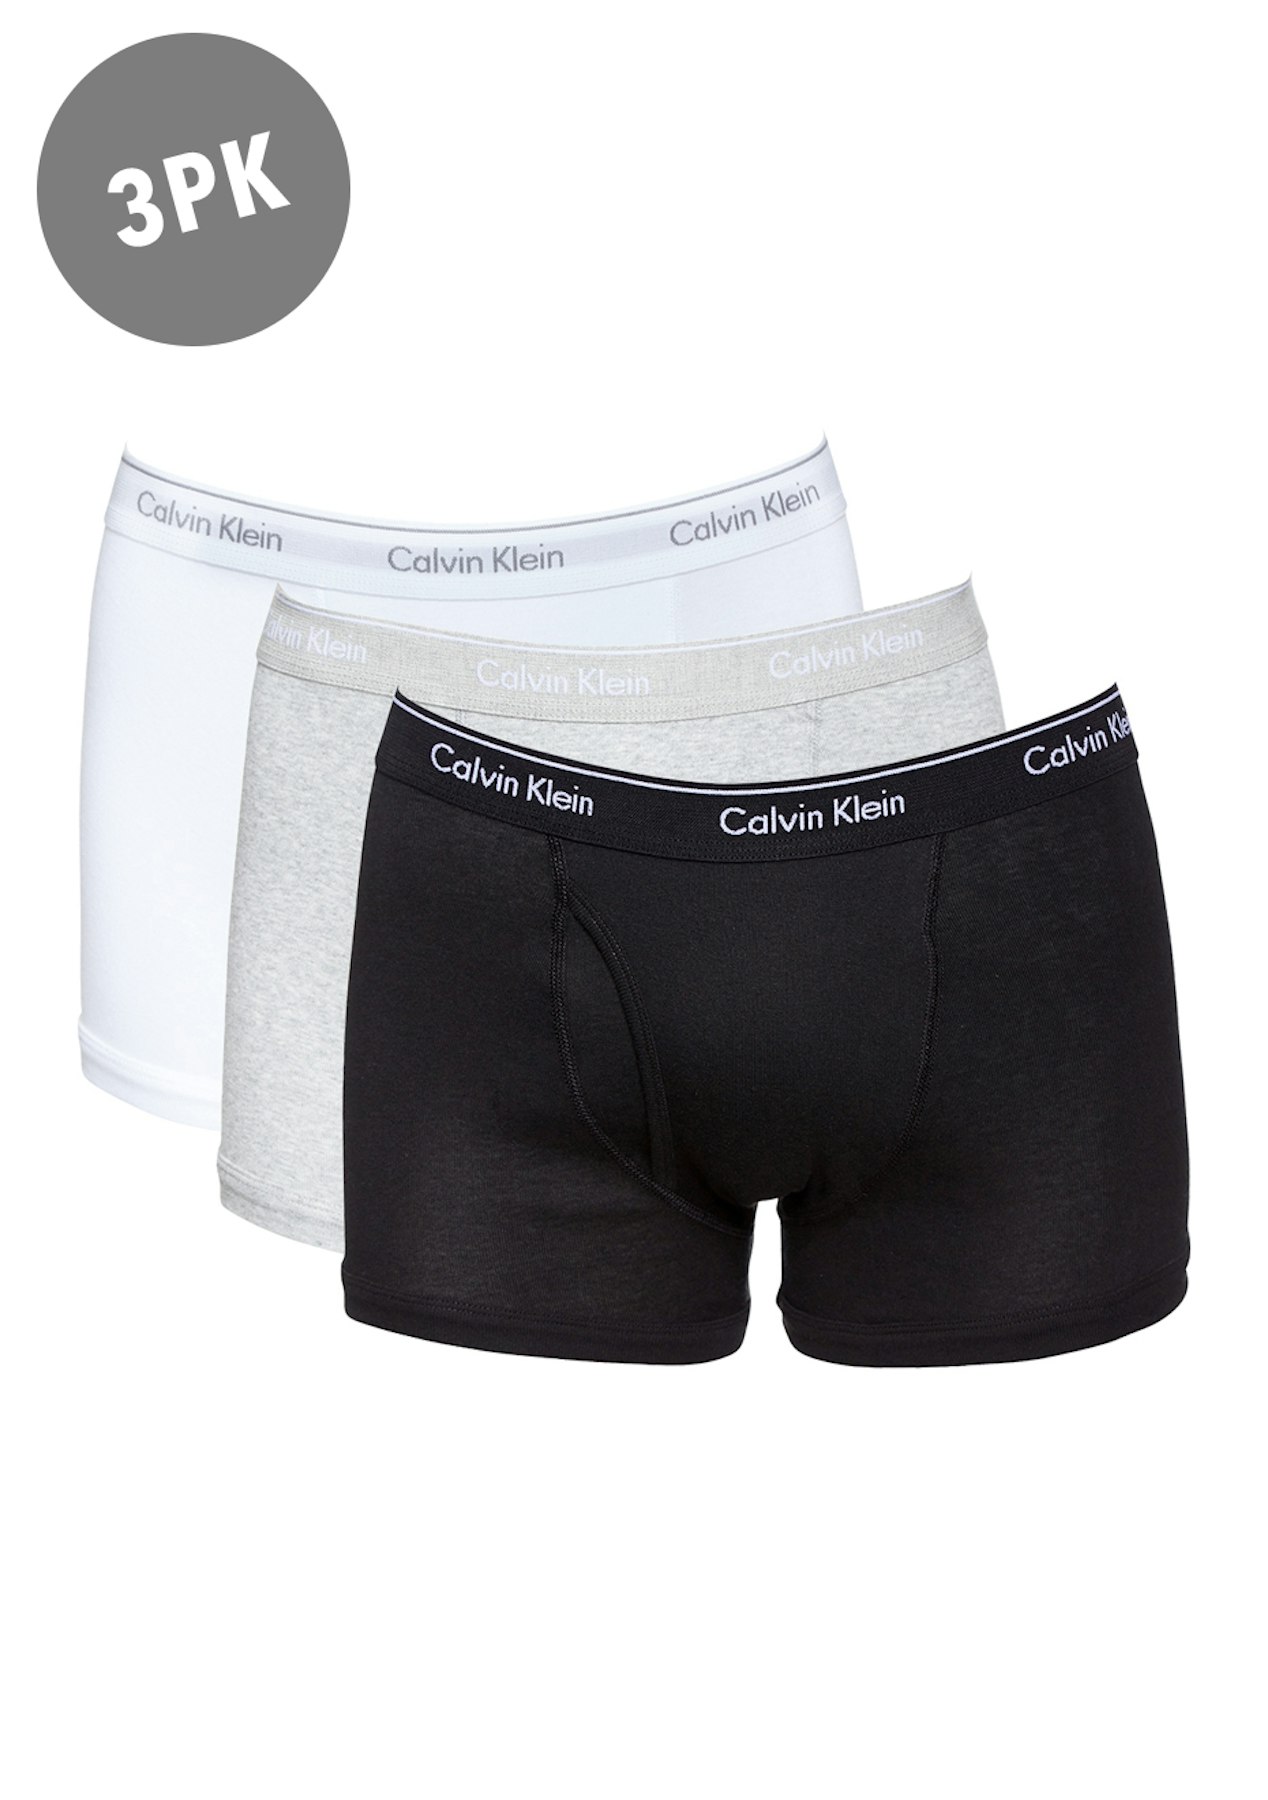 Calvin Klein - Mens Cotton Classics 3Pk Trunk - Black/Grey/White - Onceit